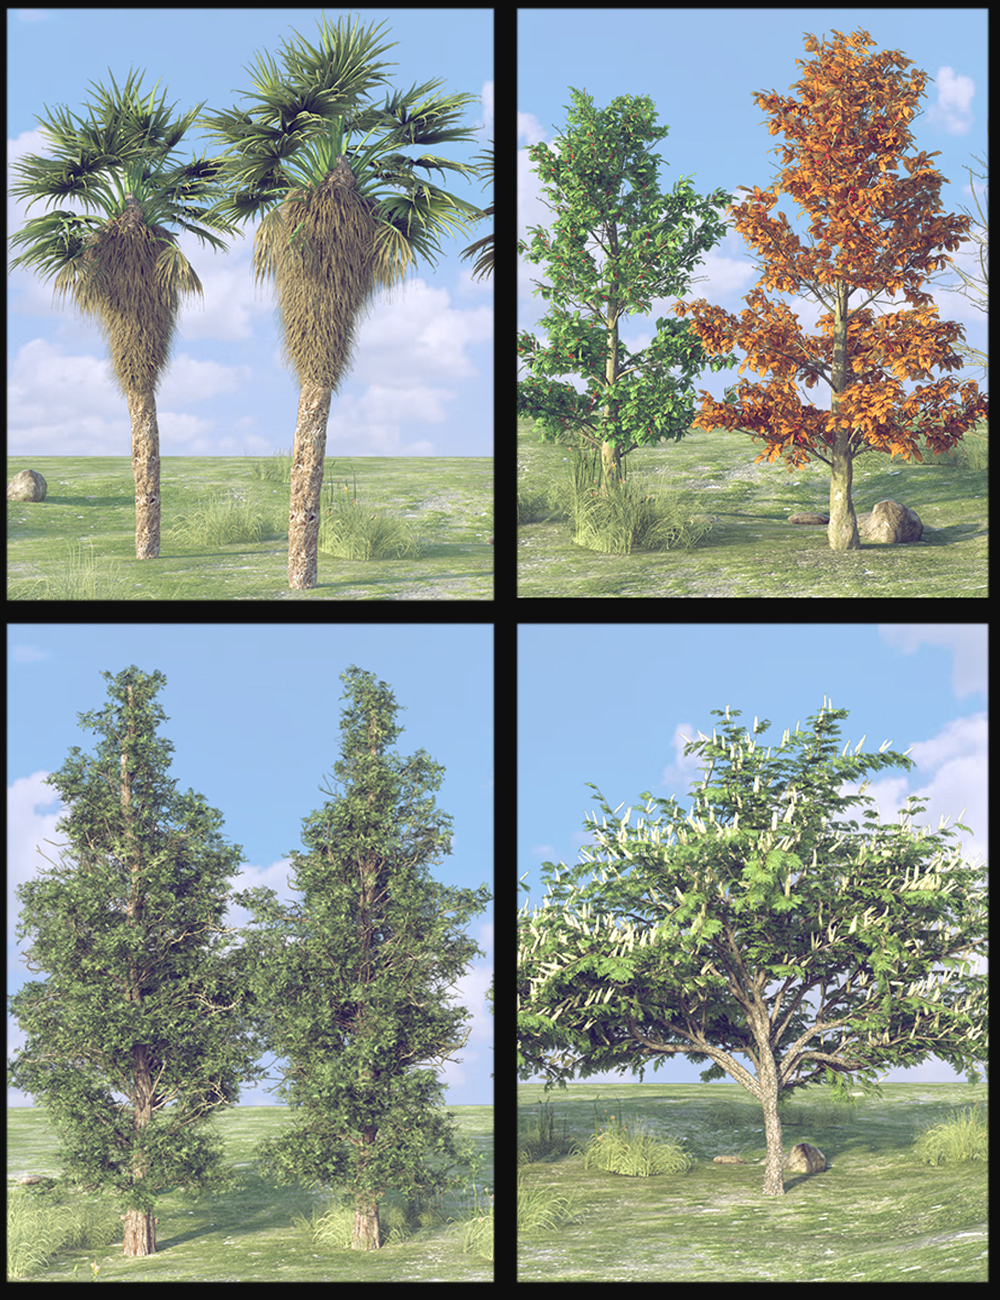 Nature Plants 05 by: Polish, 3D Models by Daz 3D